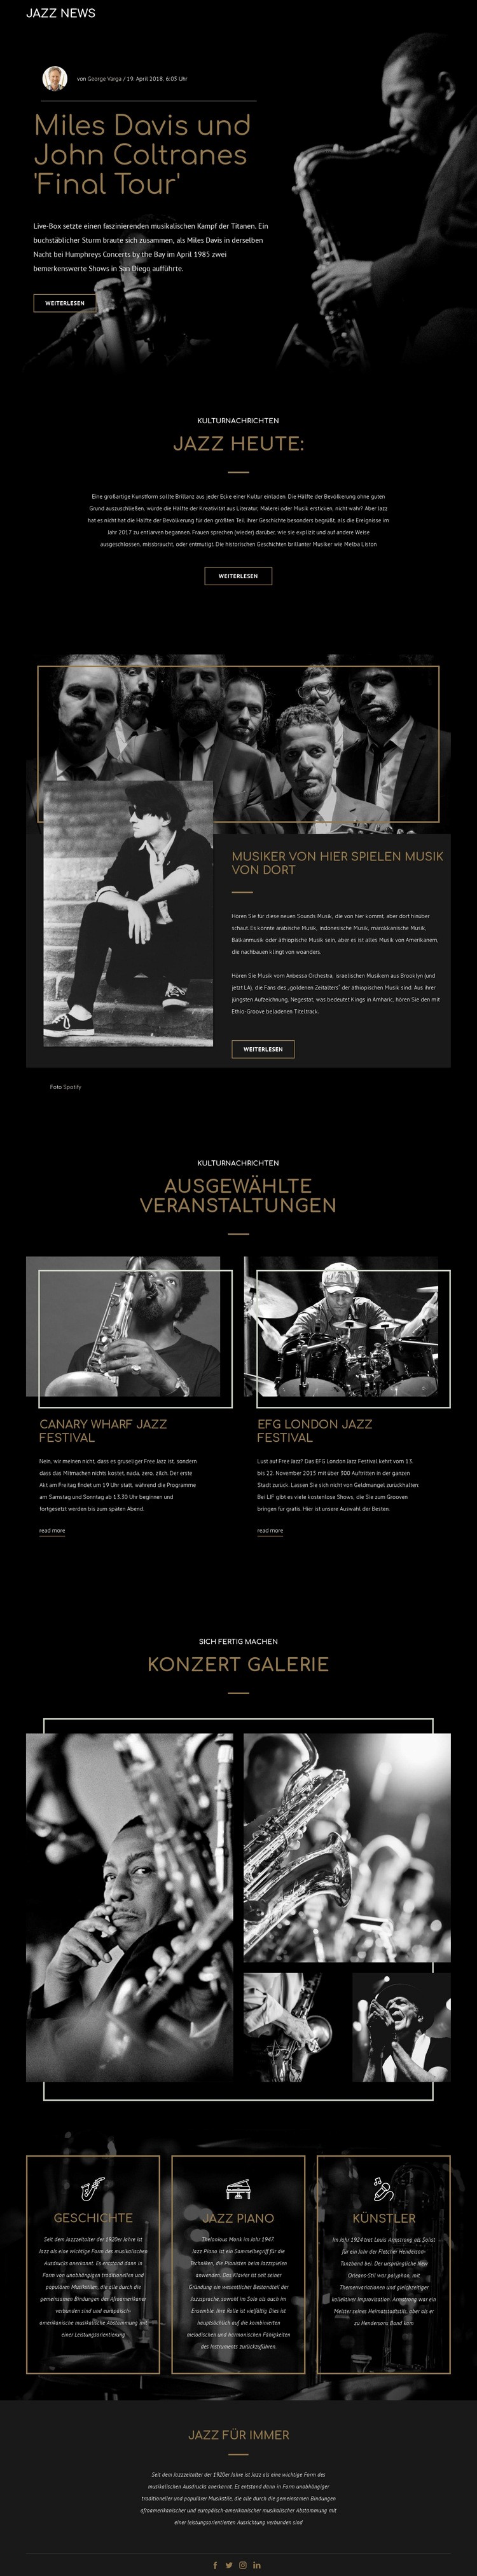 Legengs der Jazzmusik Landing Page